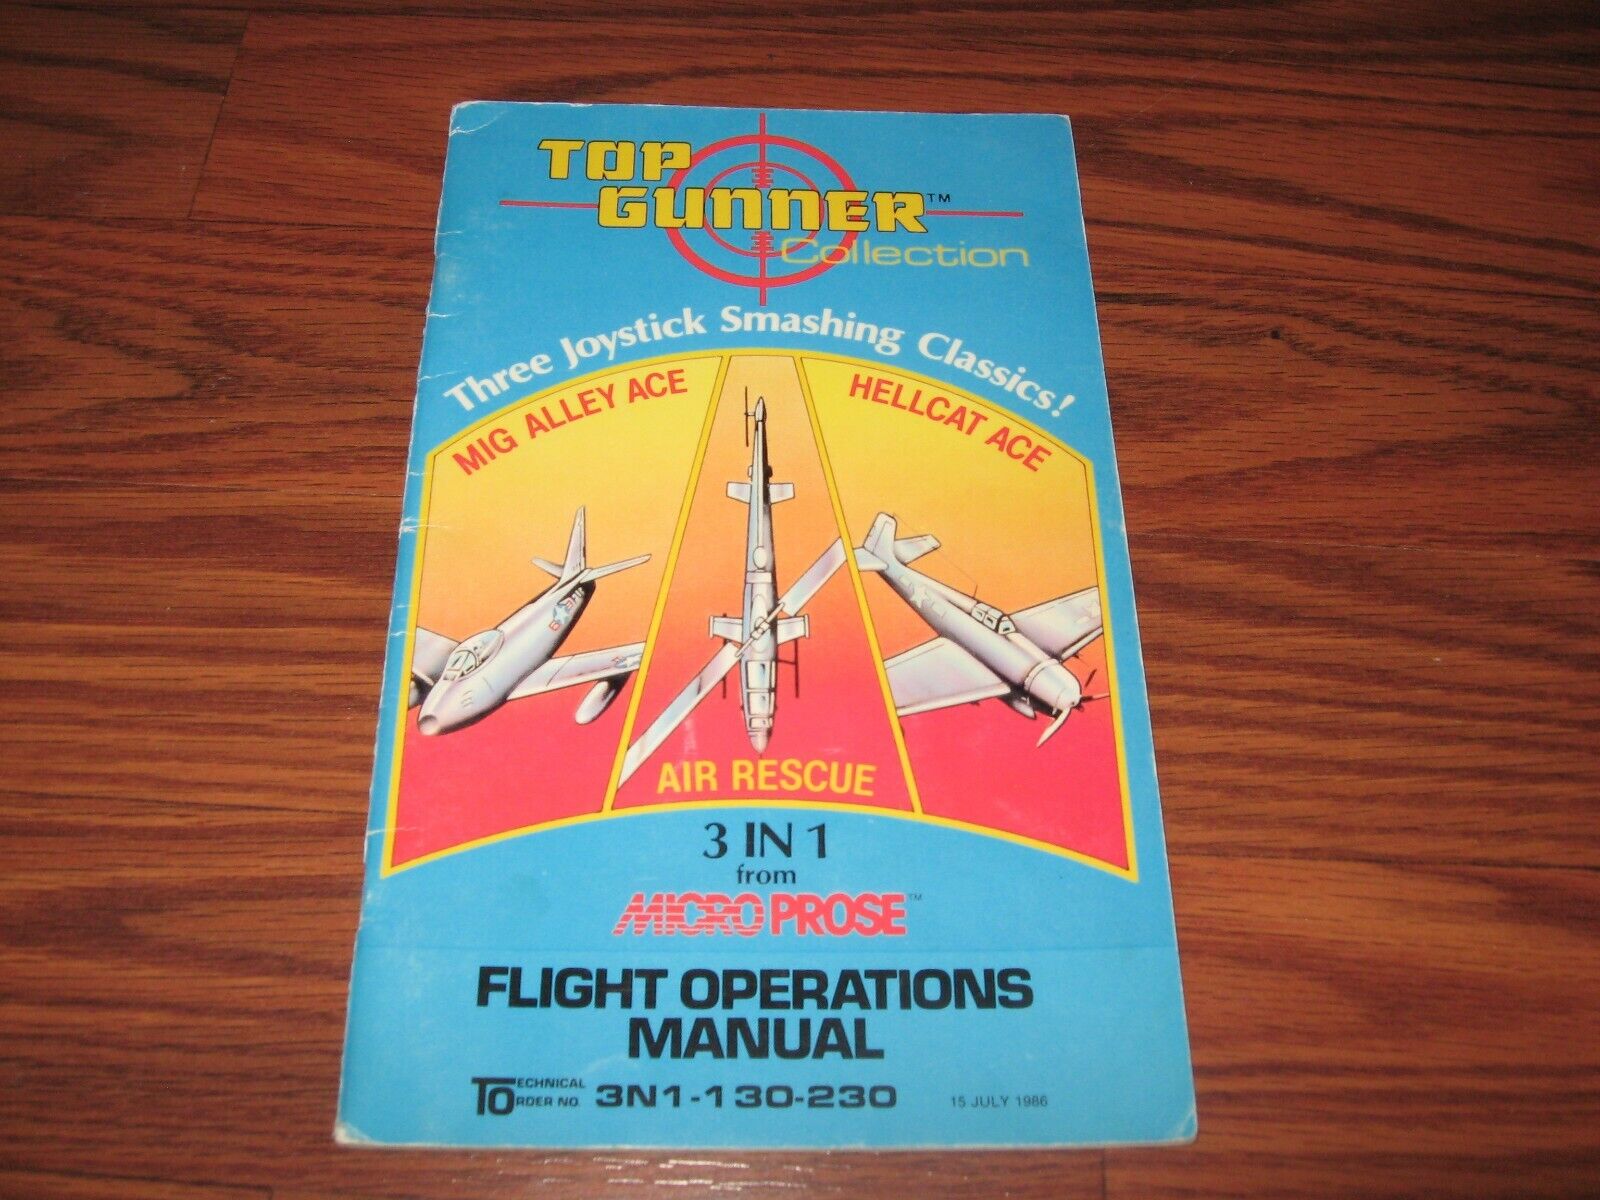 Top Gunner Flight Operations Manual - No Game